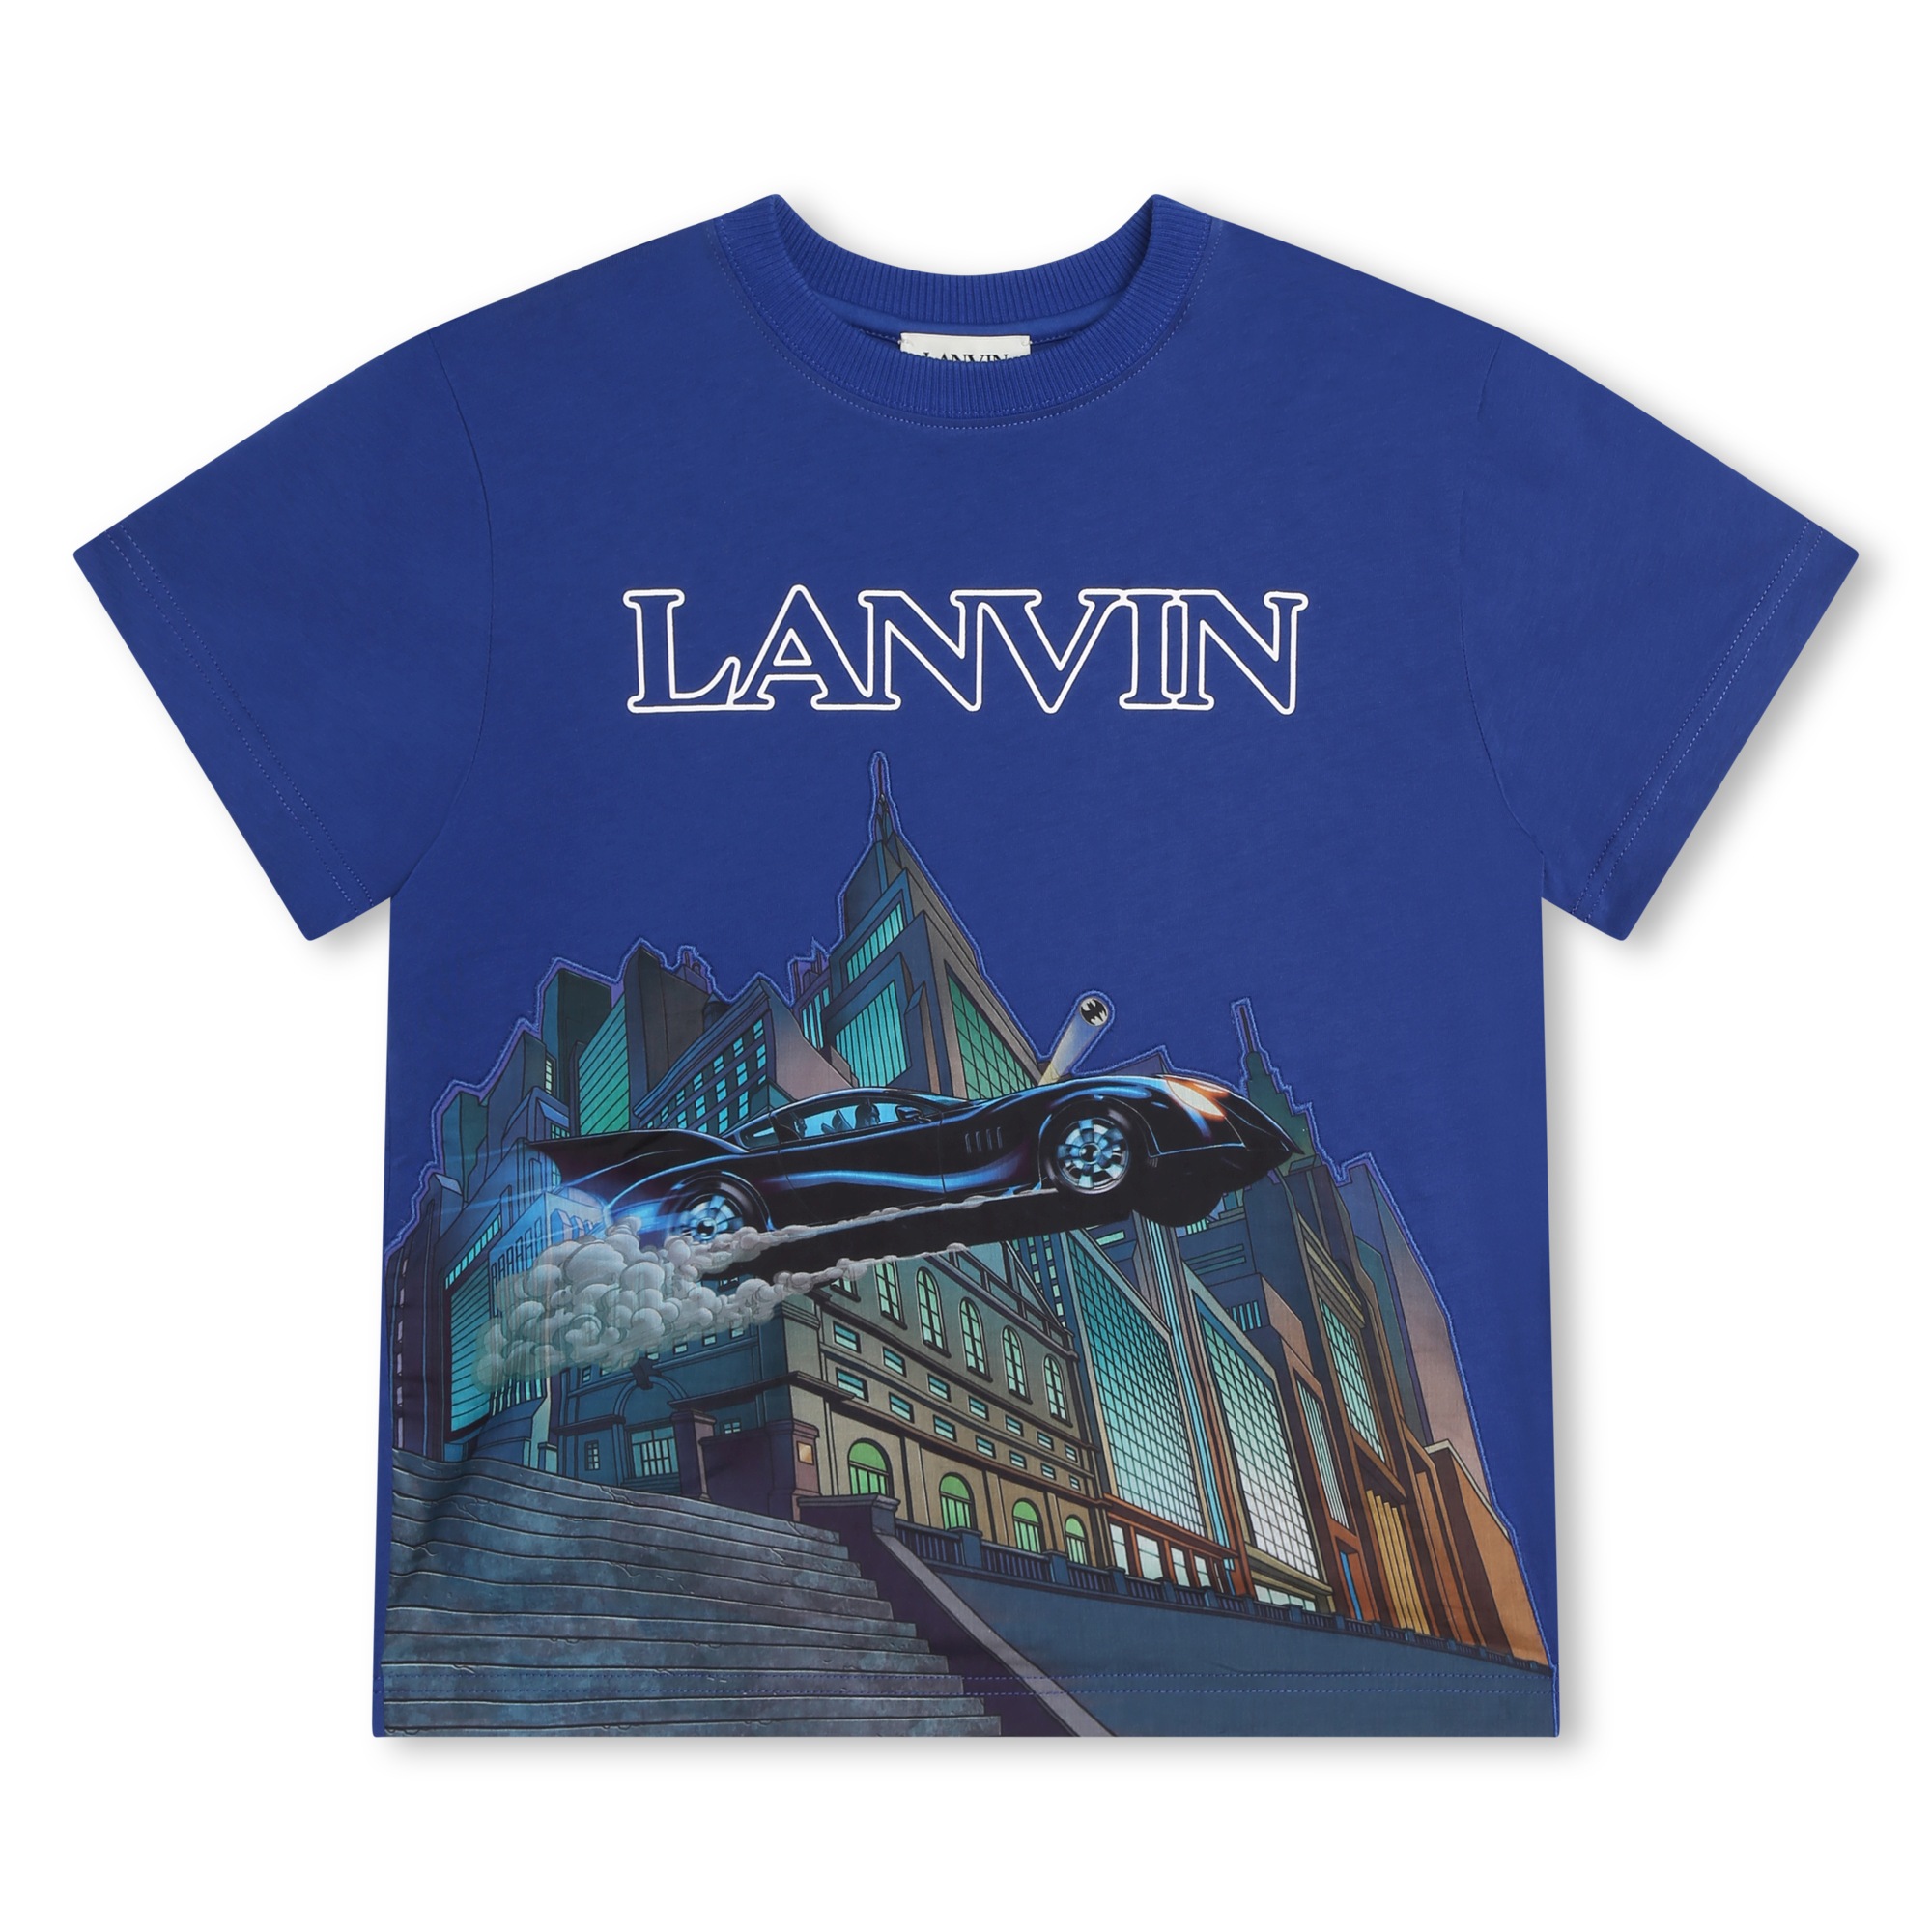 Batmobile print T-shirt LANVIN for BOY